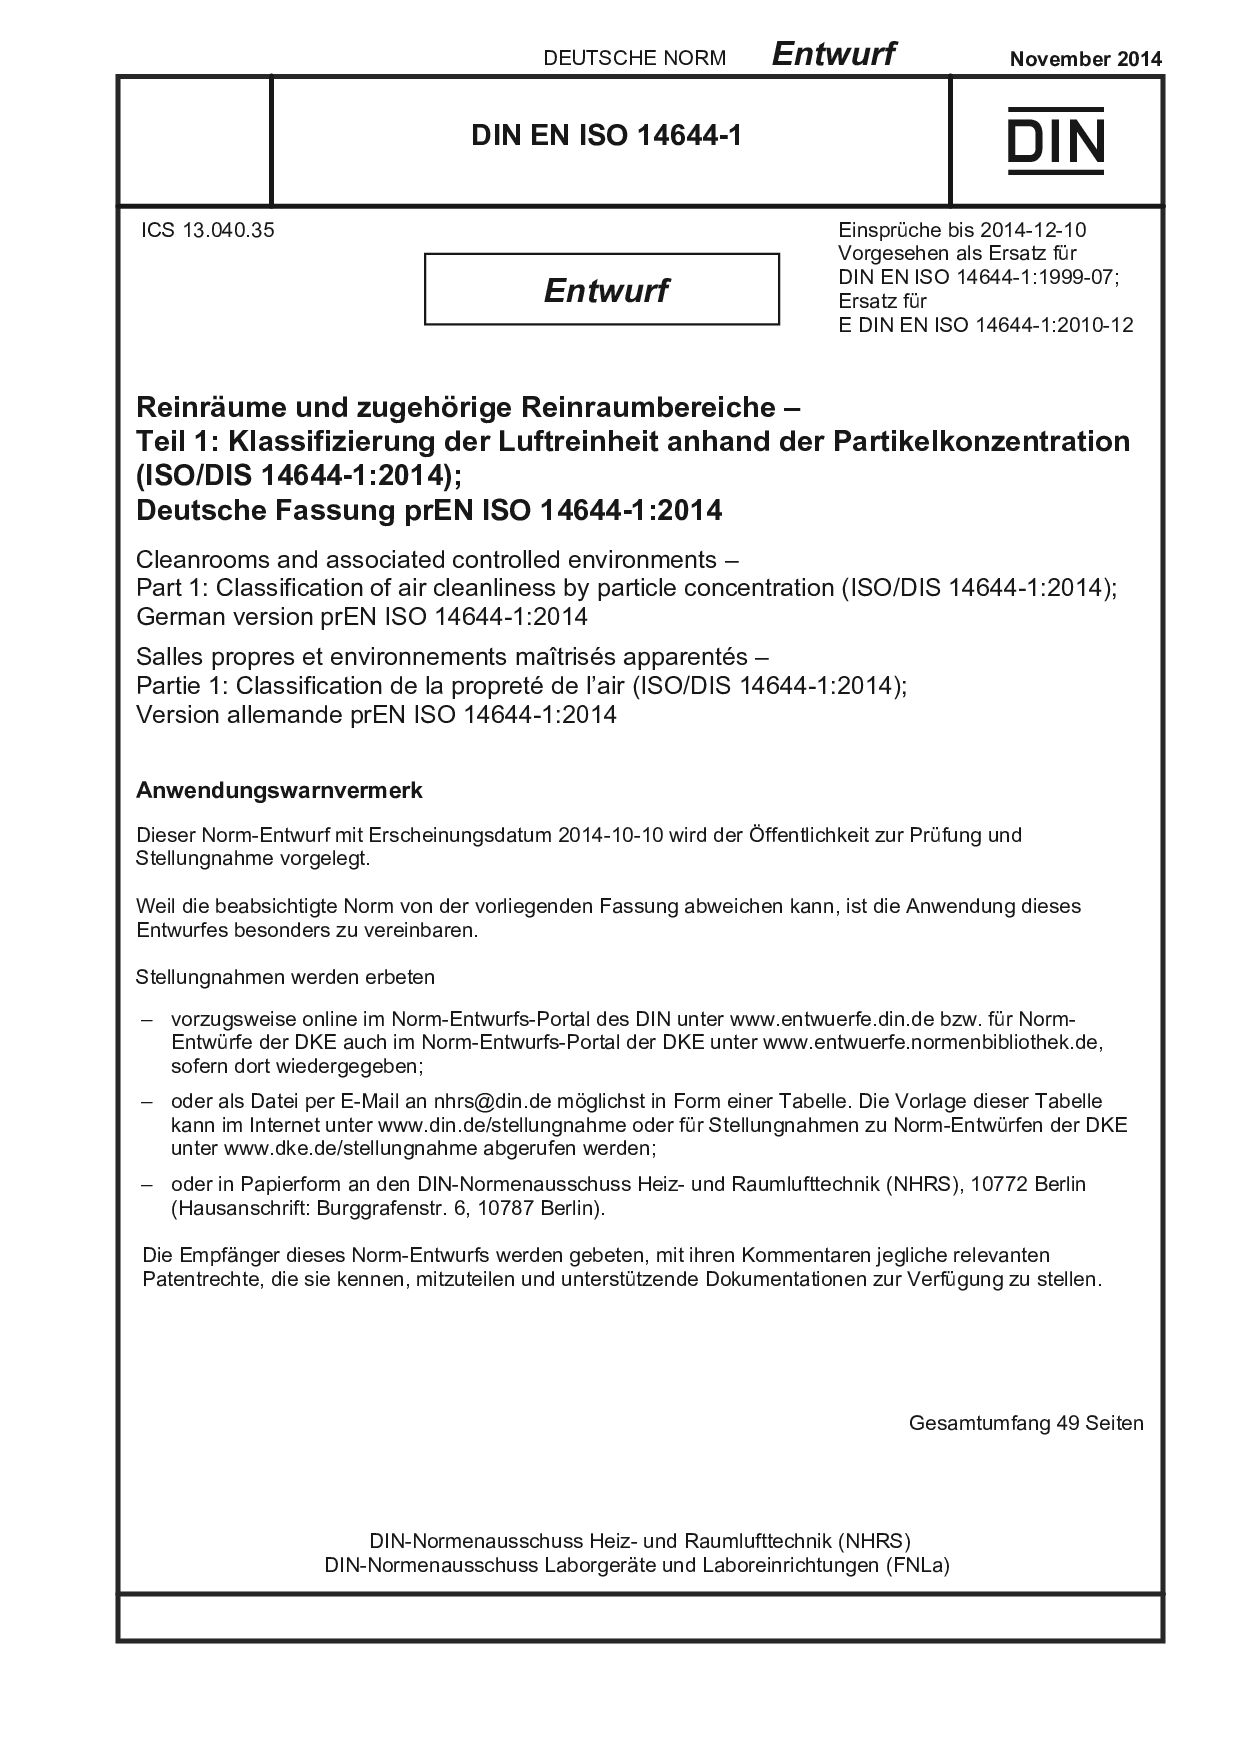 DIN EN ISO 14644-1 E:2014-11